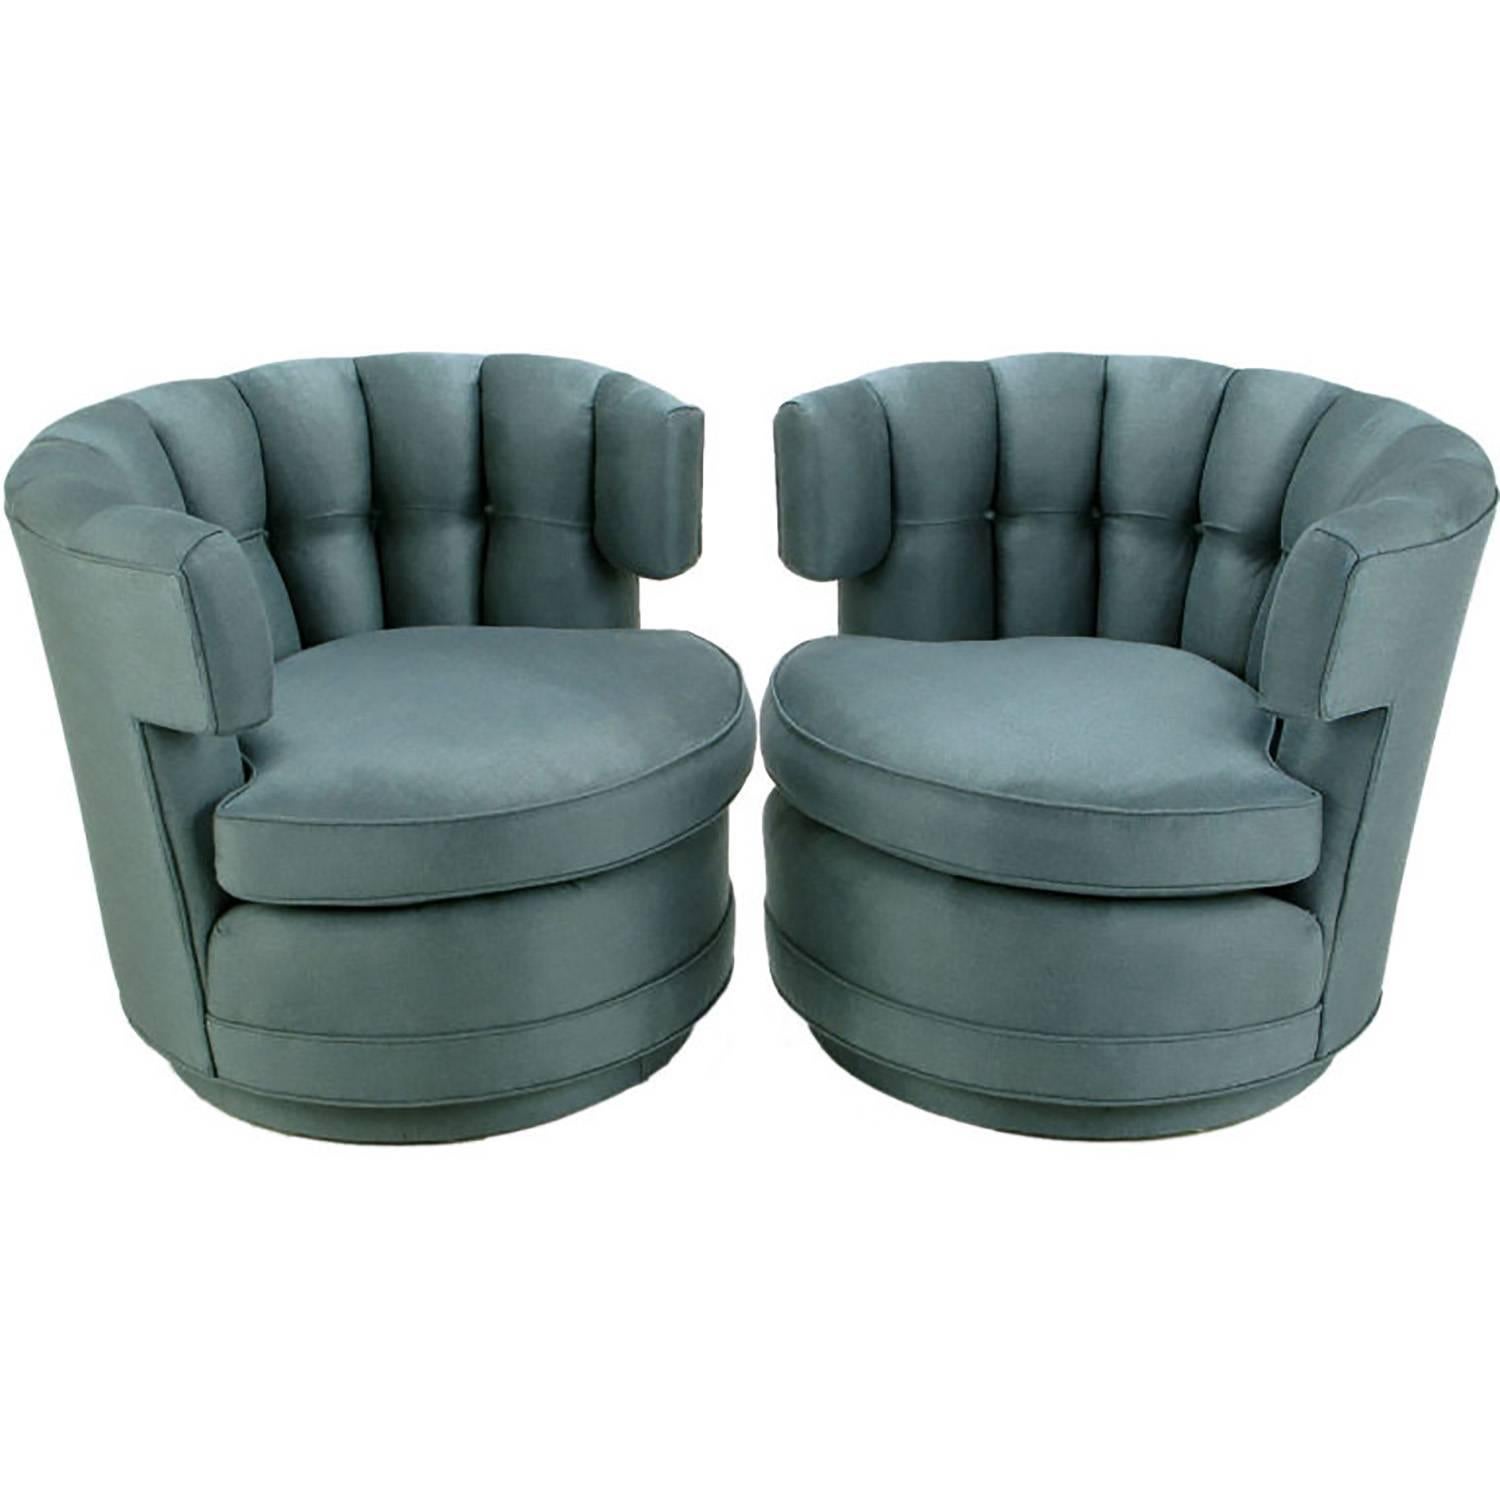 Pair of Cadet-Blue Wool Felt Button-Tufted Swivel Barrel Chairs